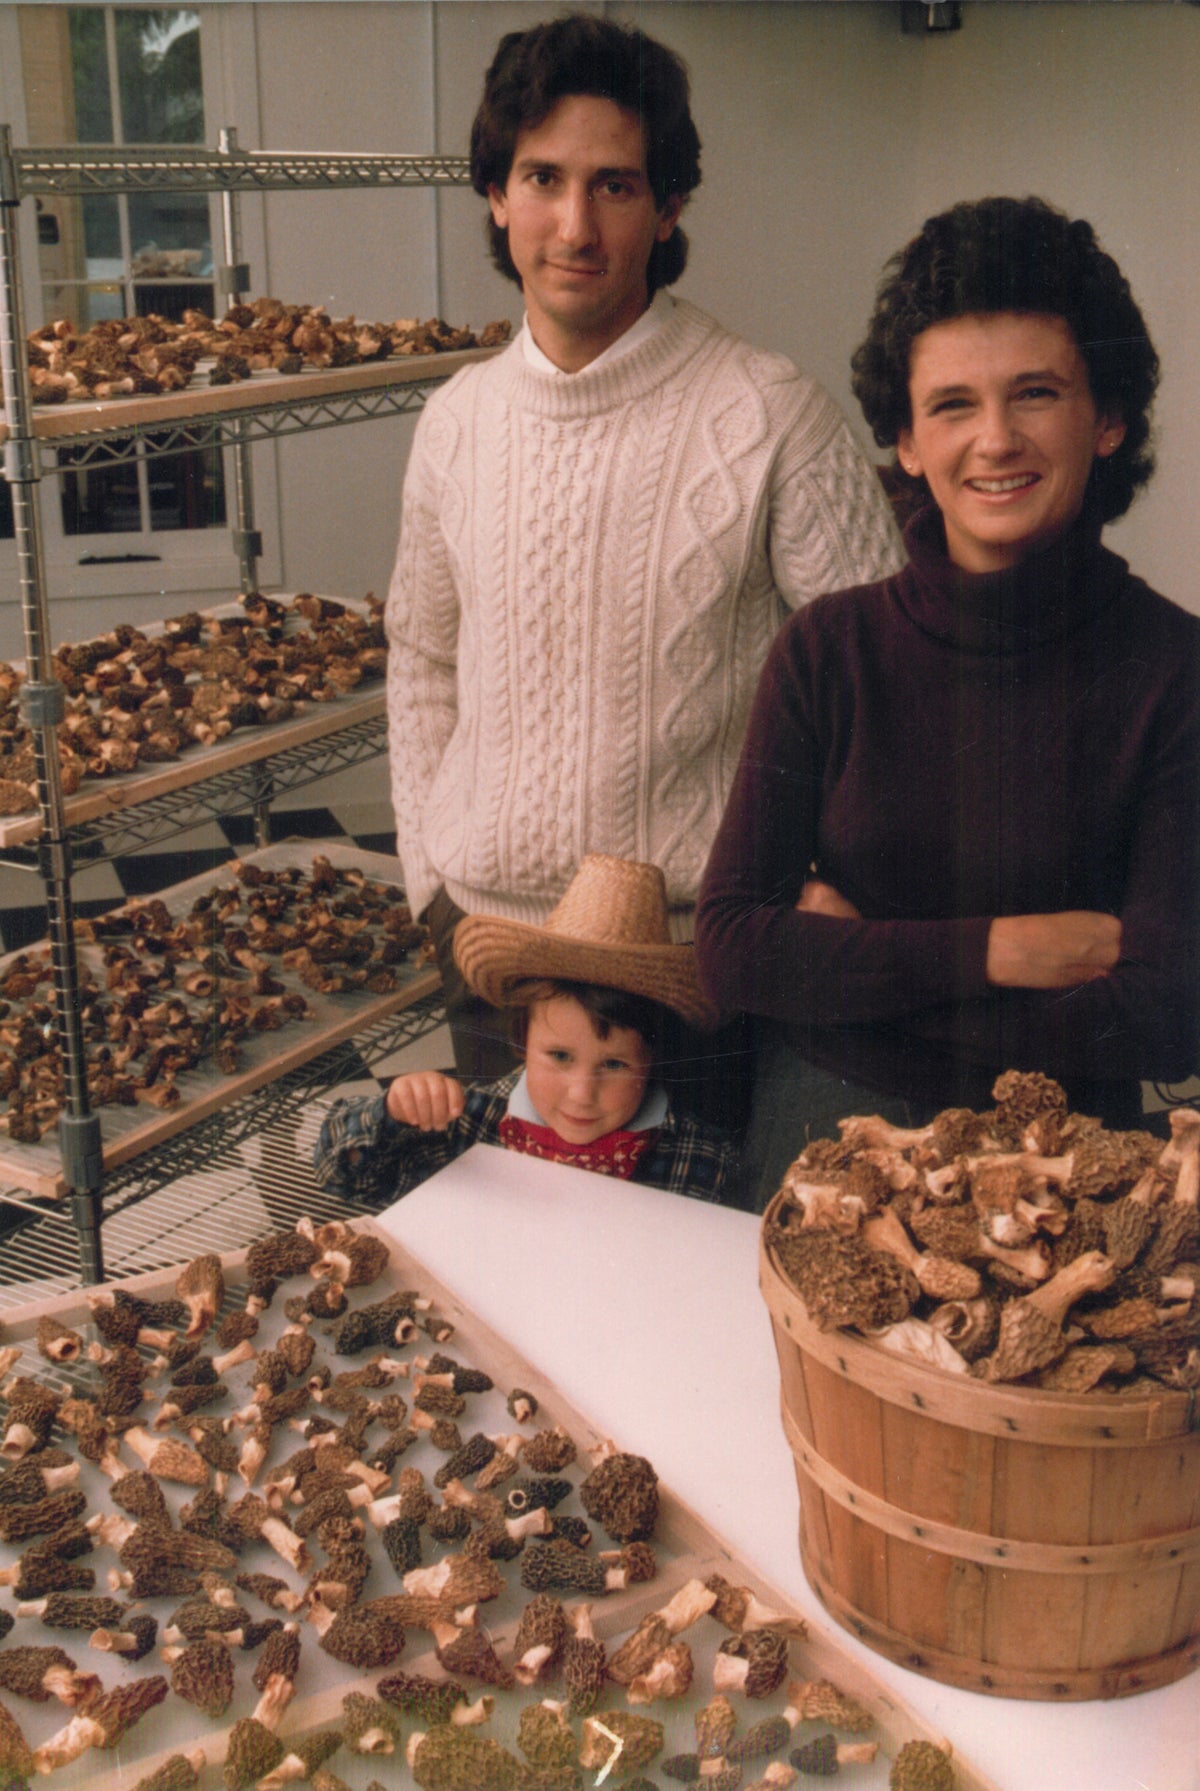 The Marshall-Rashid Family in the 1980s picking mushrooms 